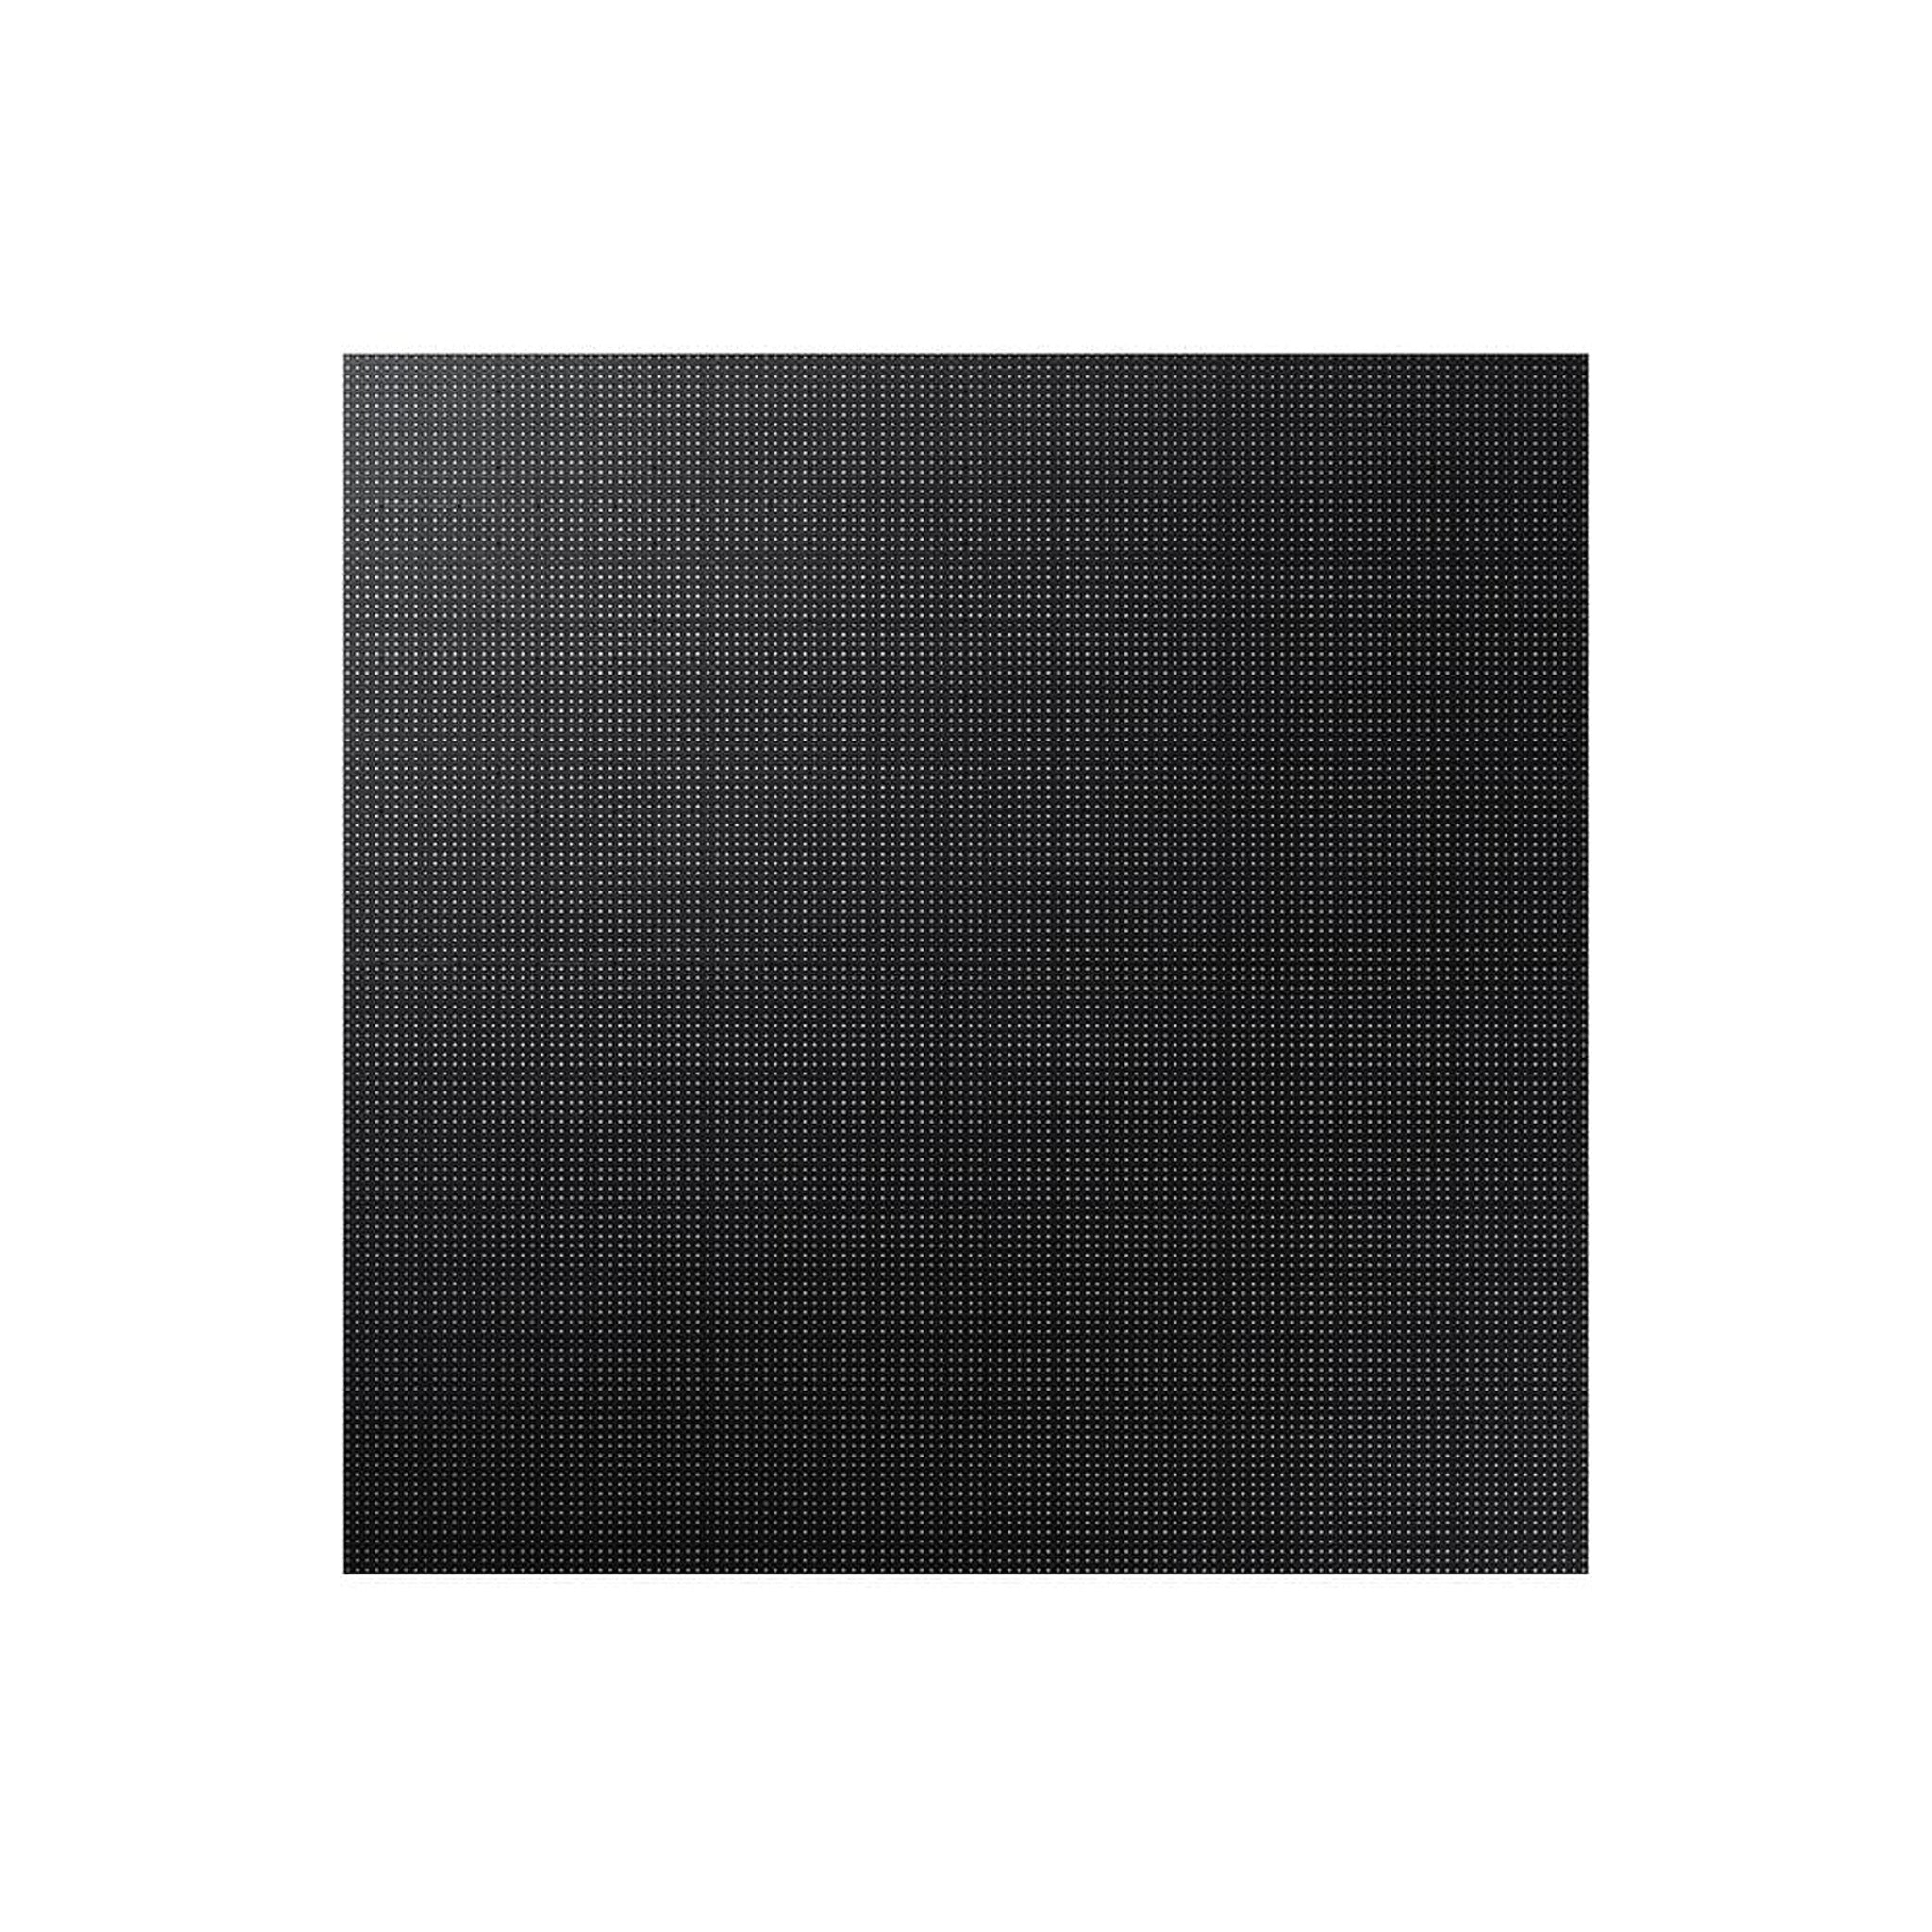 SAMSUNG OUTDOOR LED MODULE - XA100J - Pixel Pitch 10